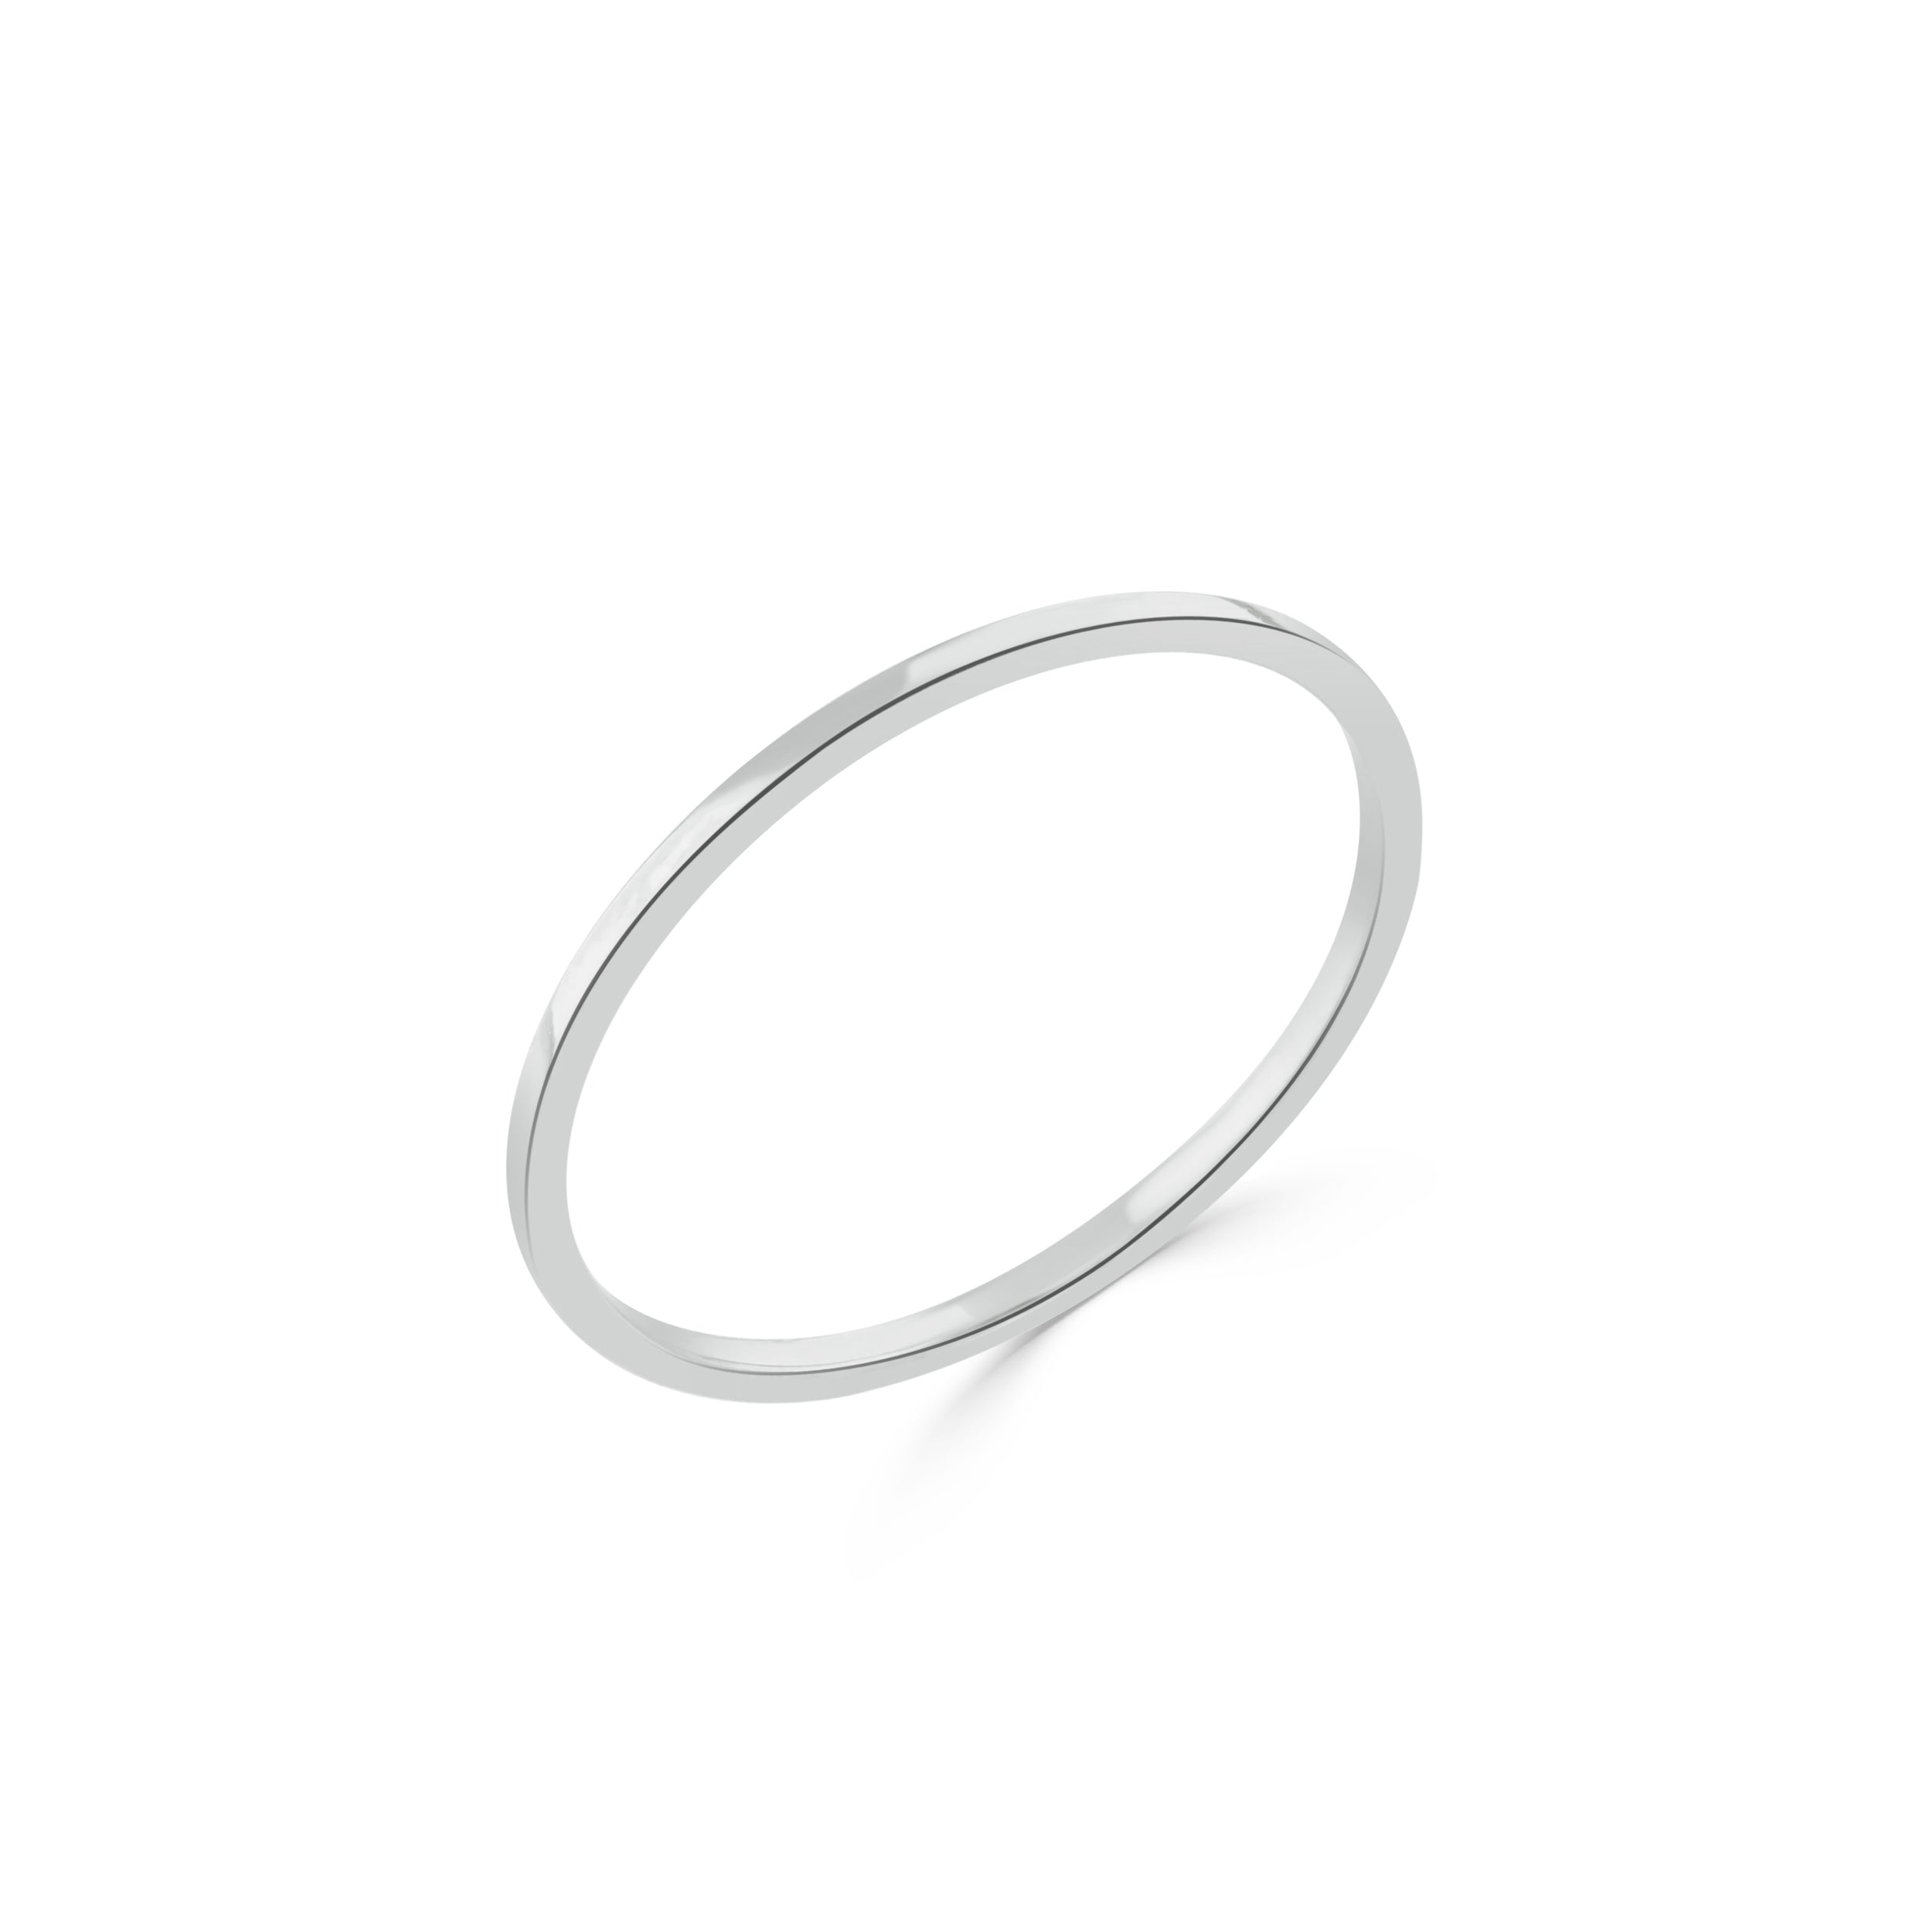 Silver flat ring